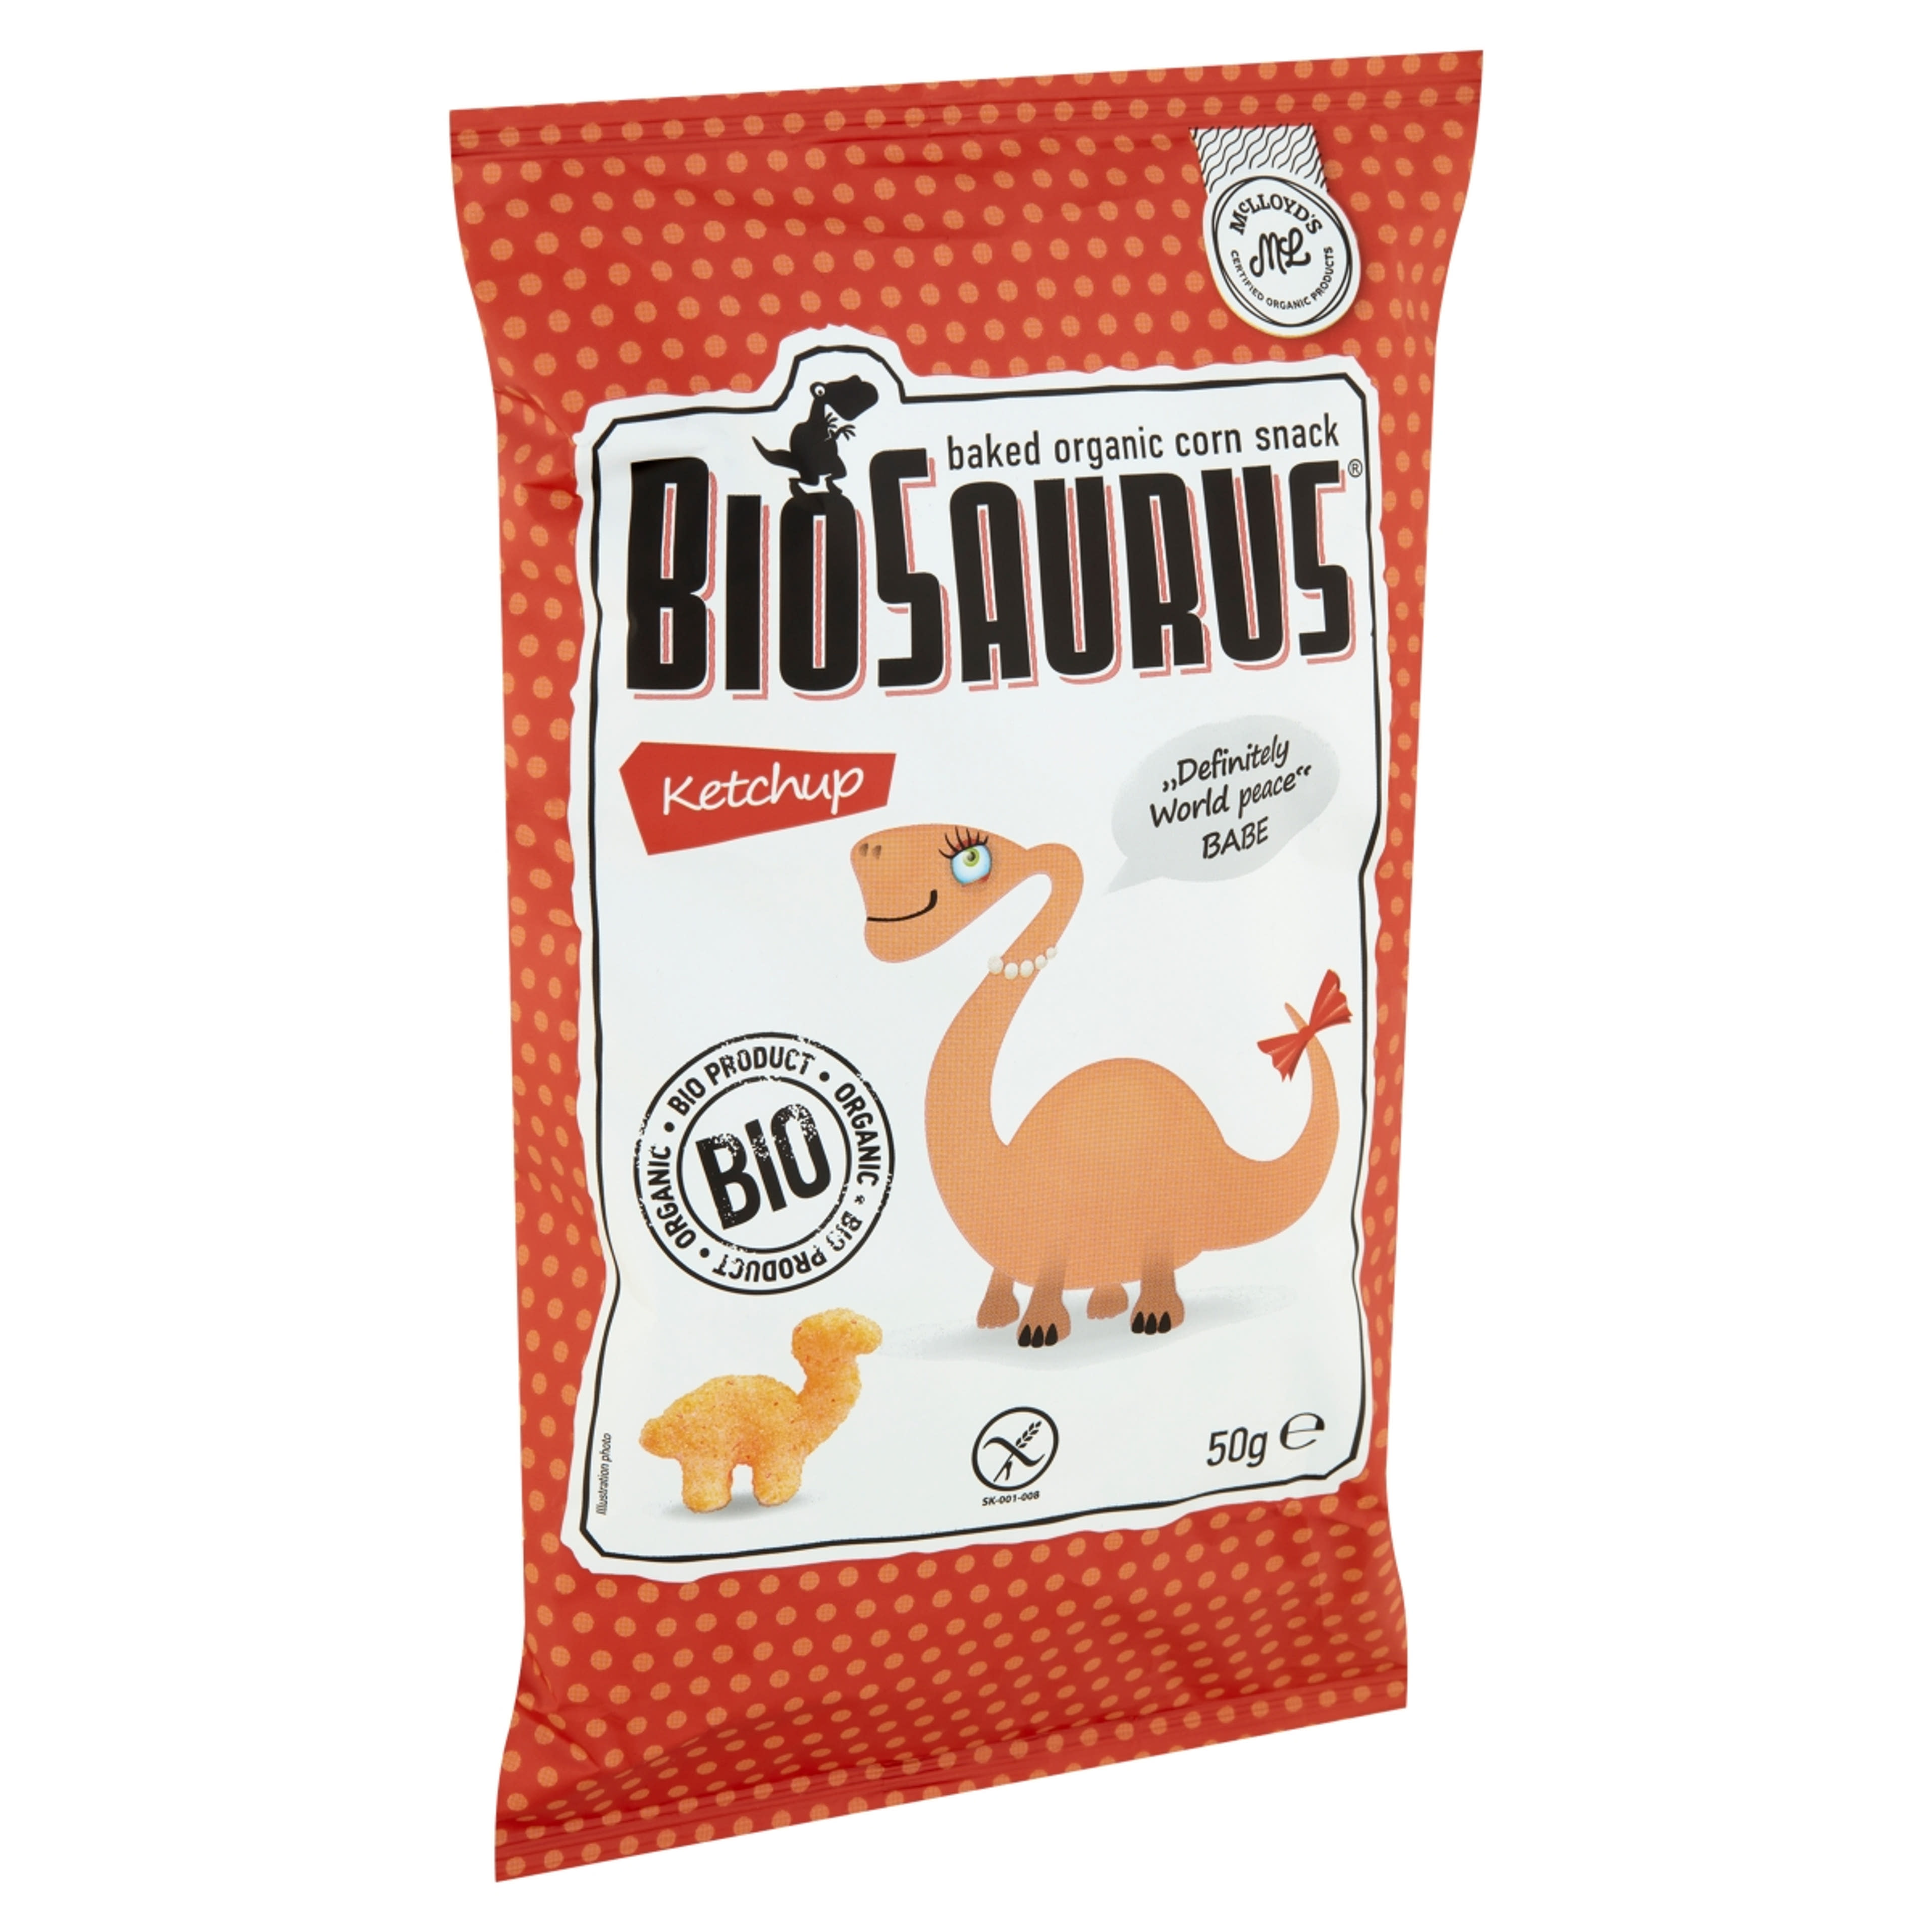 Biopont Biosaurus ketchupos ízű sült kukoricás snack - 50 g-2